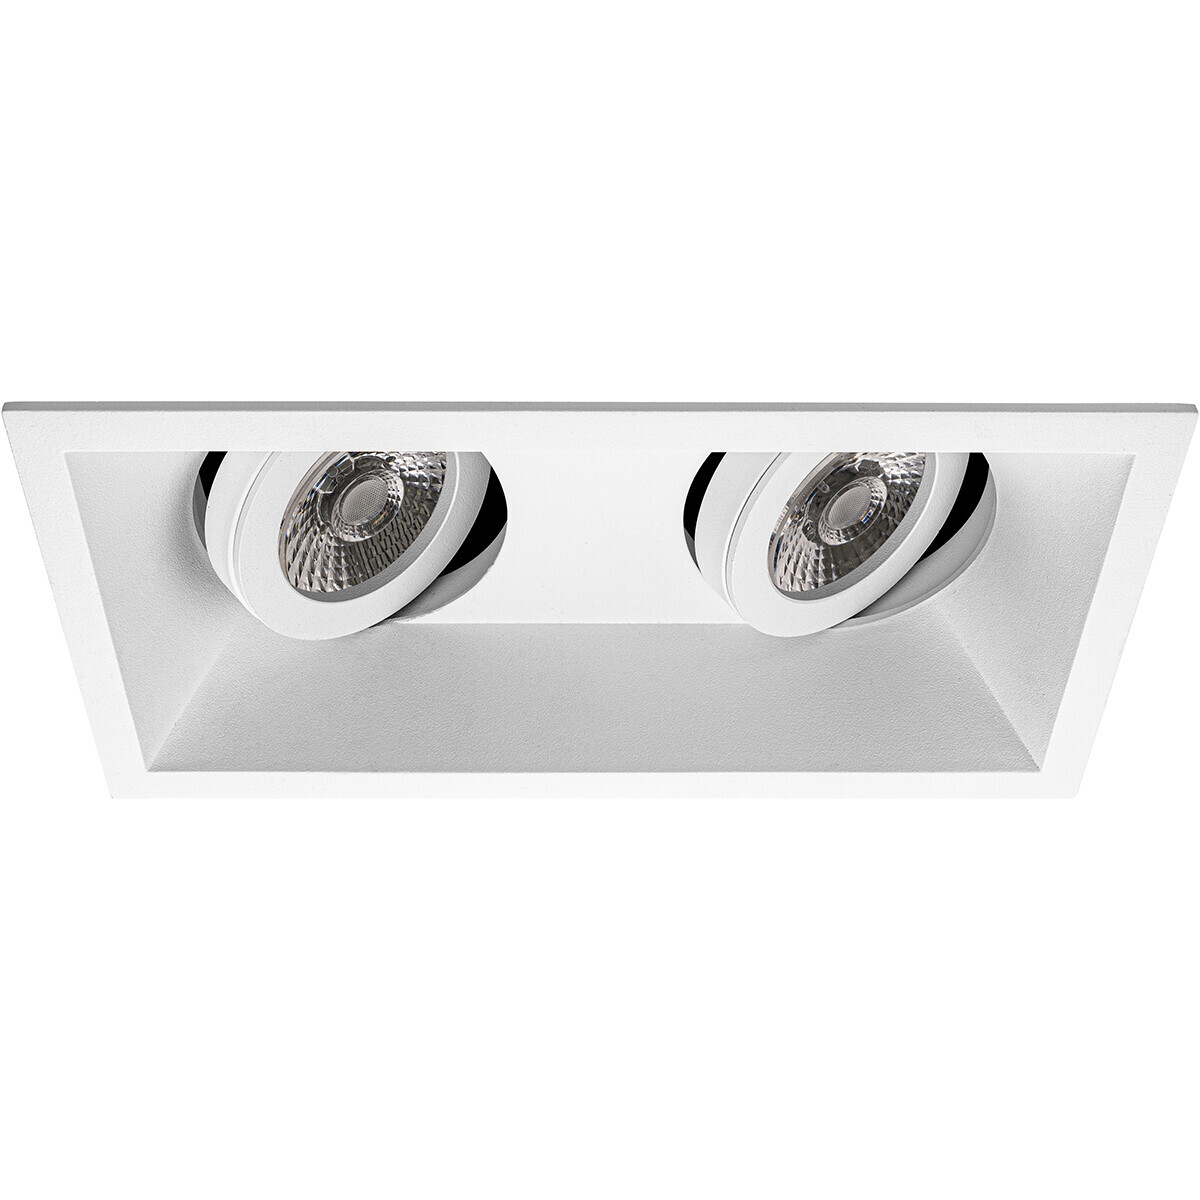 BES LED Spot Armatuur GU10 - Pragmi Zano Pro - Inbouw Rechthoek Dubbel - Mat Wit - Aluminium - Kantelbaar - 185x93mm